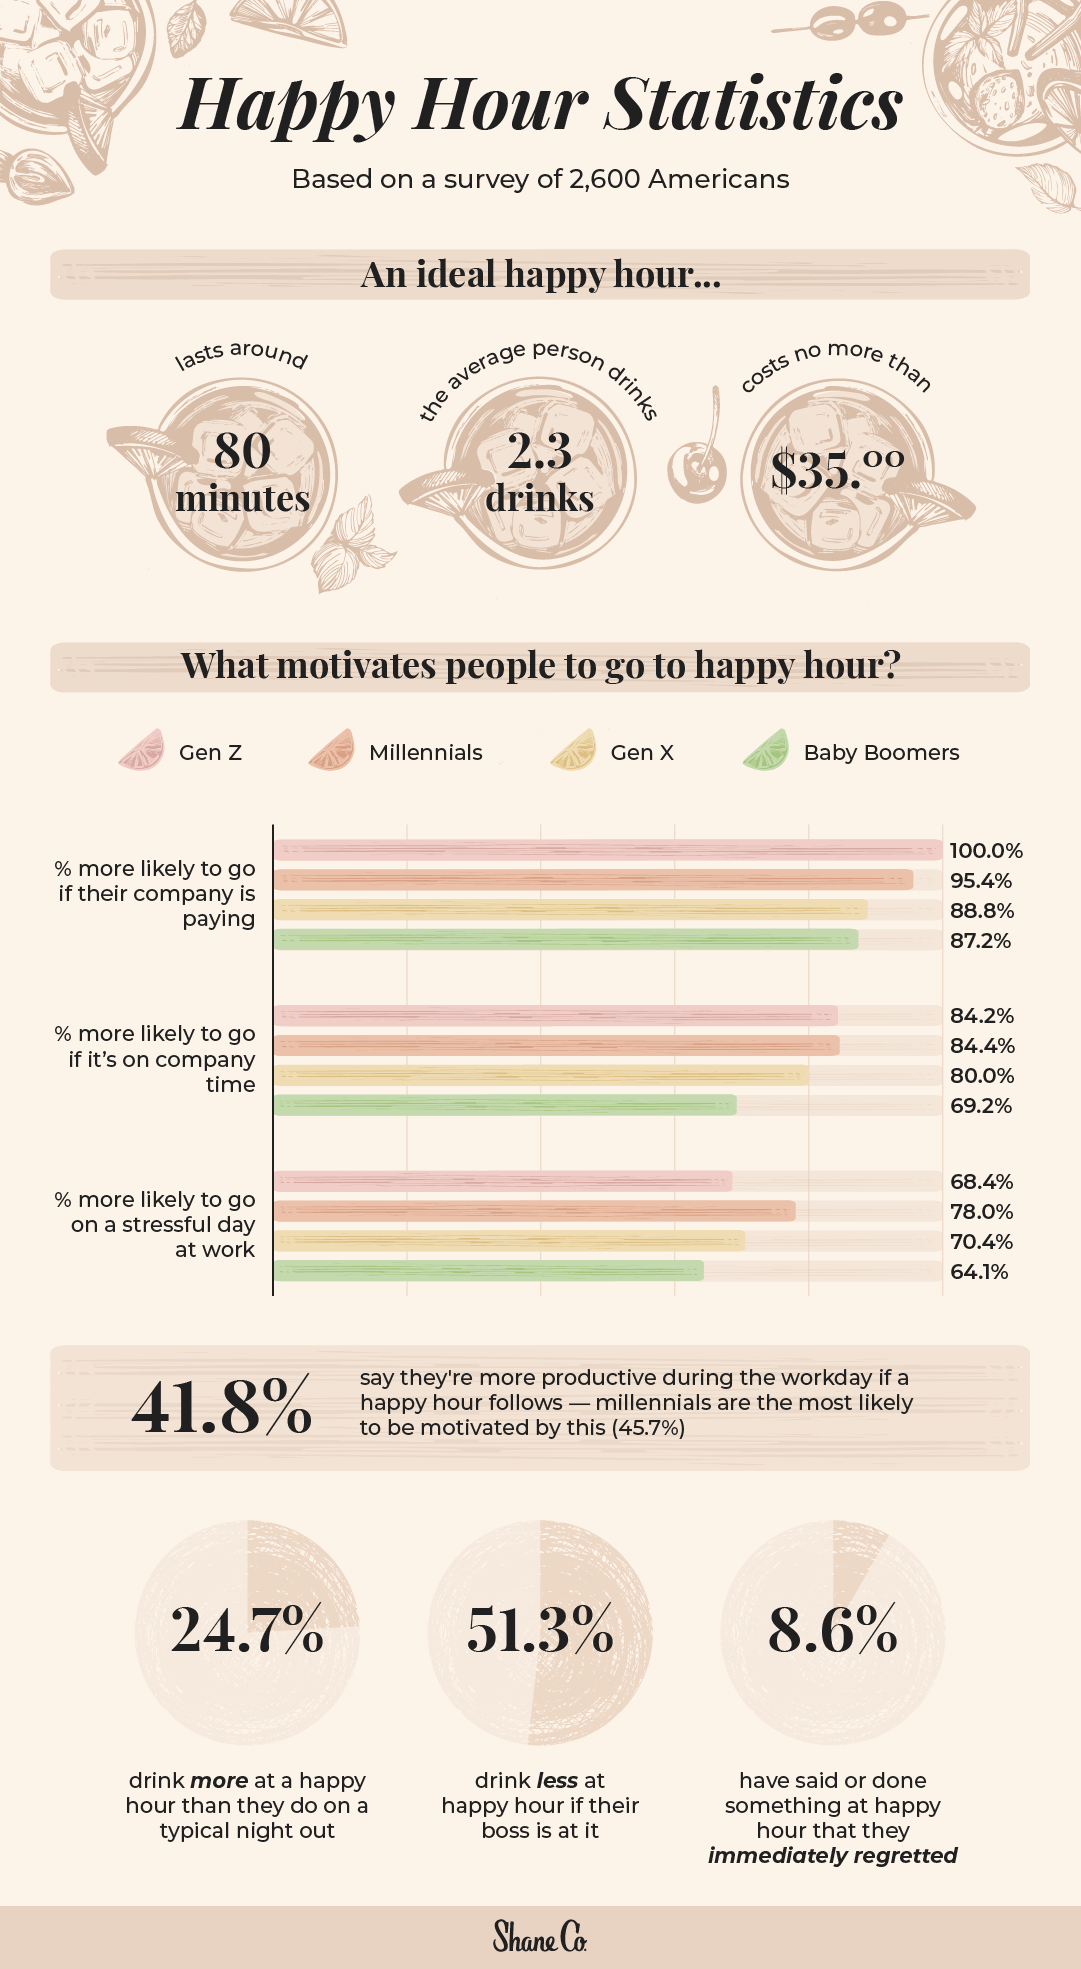 Graphic showing various statistics regarding happy hours in the U.S.